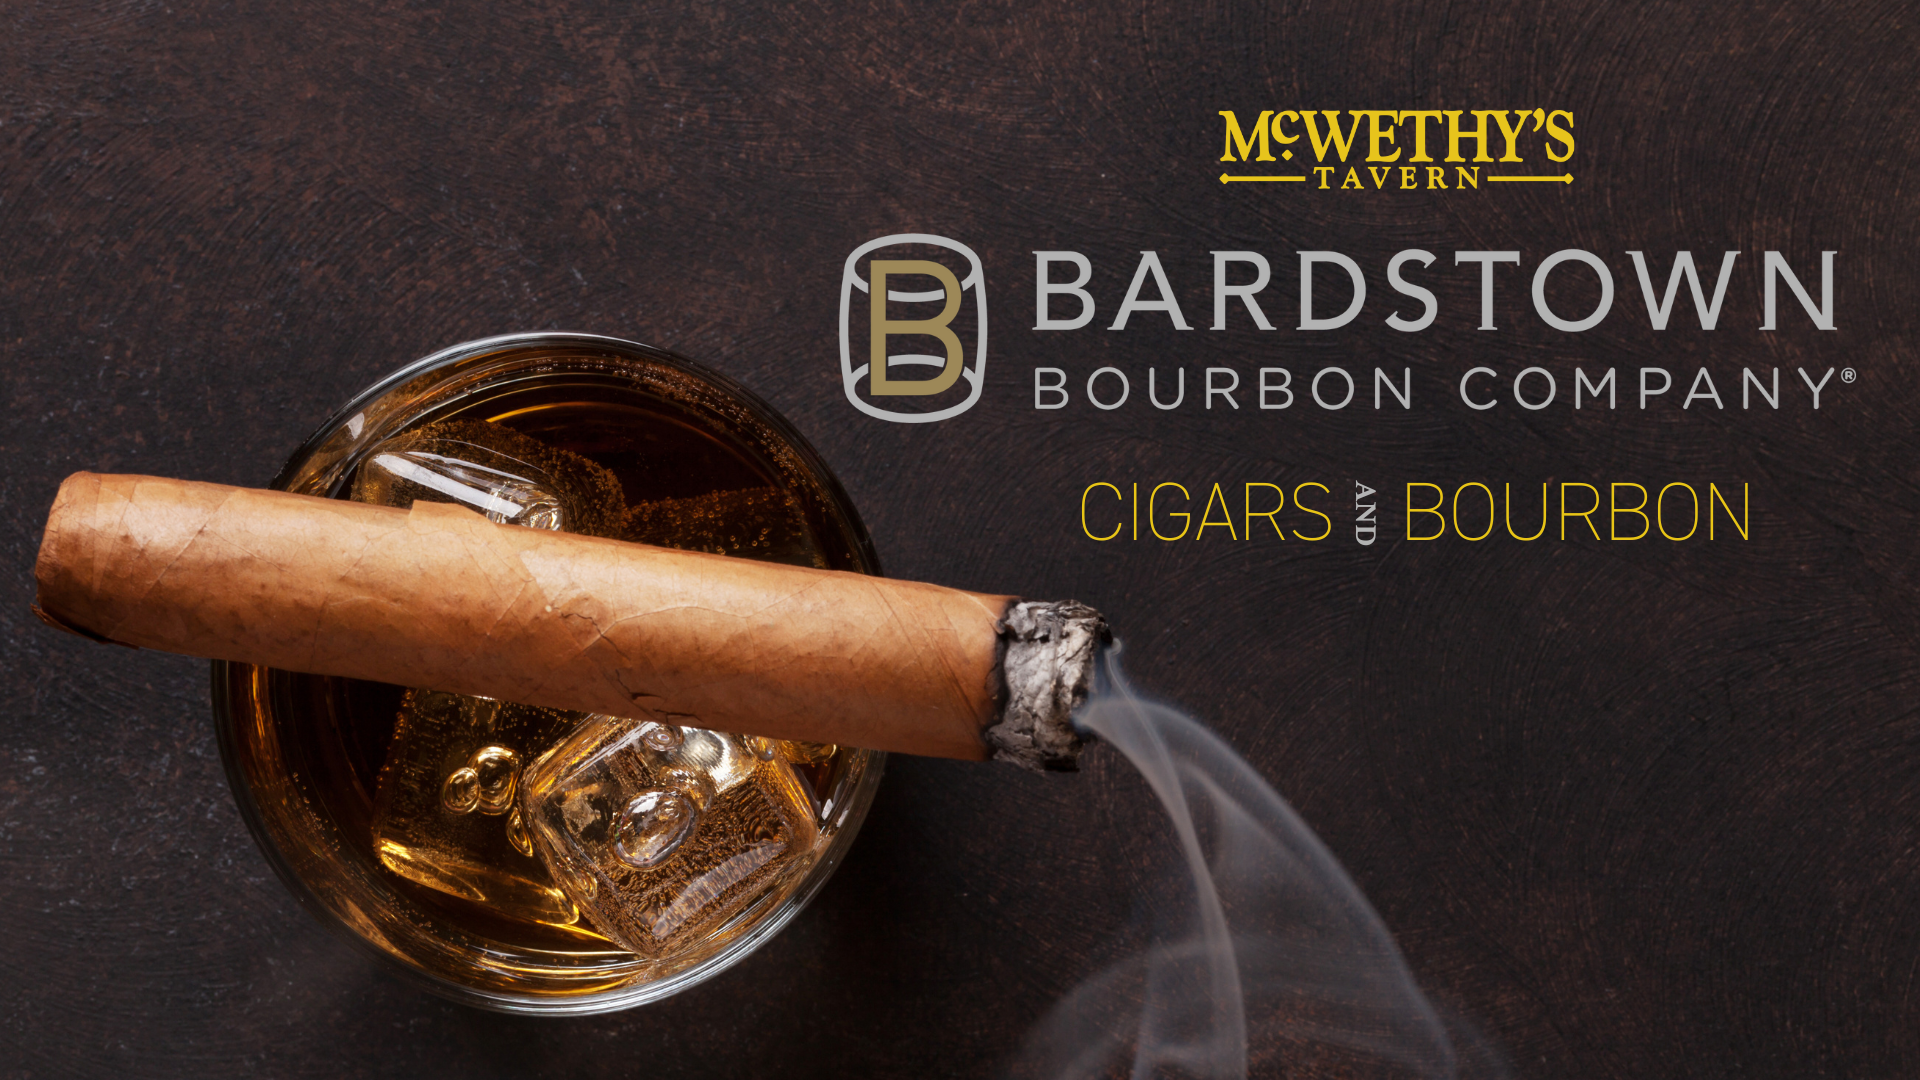 McWethy's Tavern Bardstown Bourbon Company Cigars & Bourbon Tasting